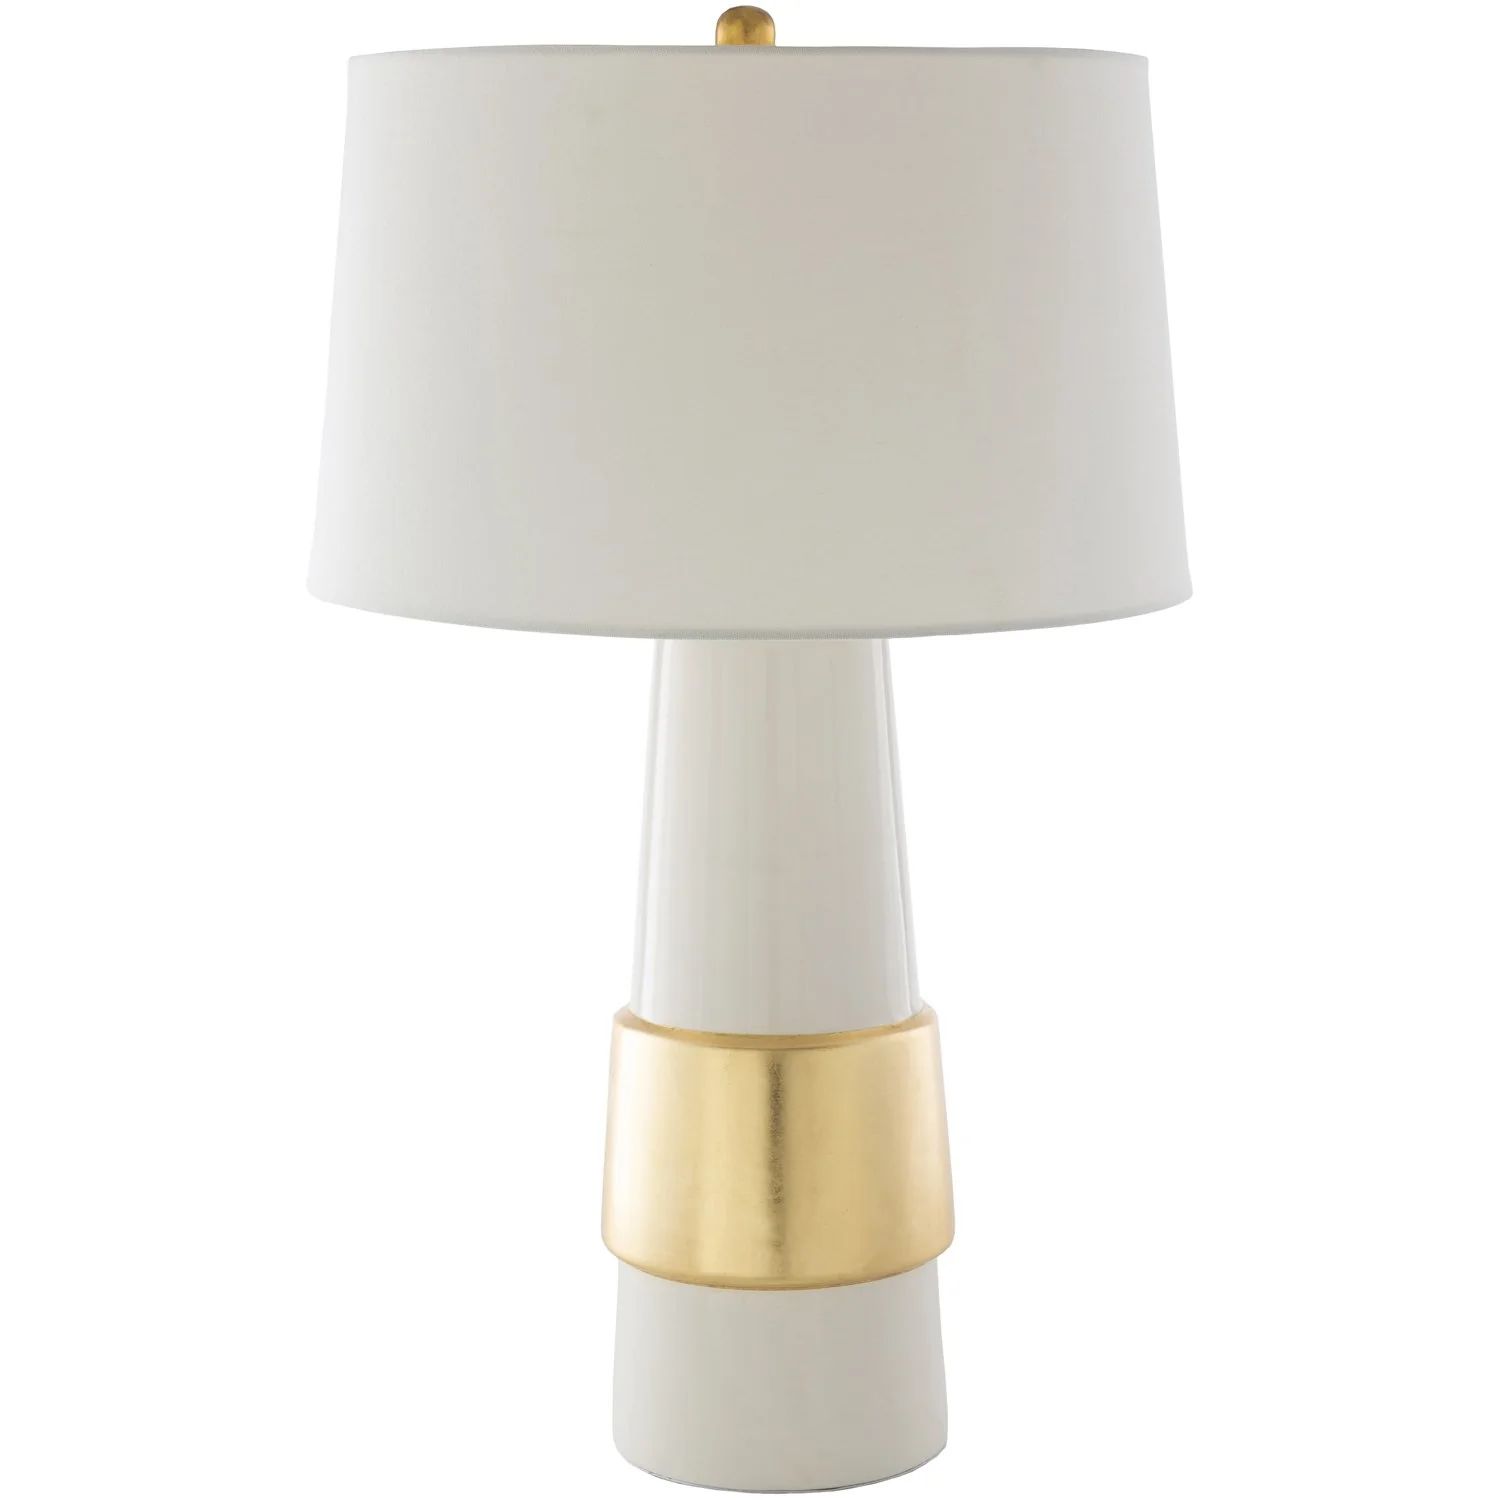 Iolani Table Lamp | Burke Decor